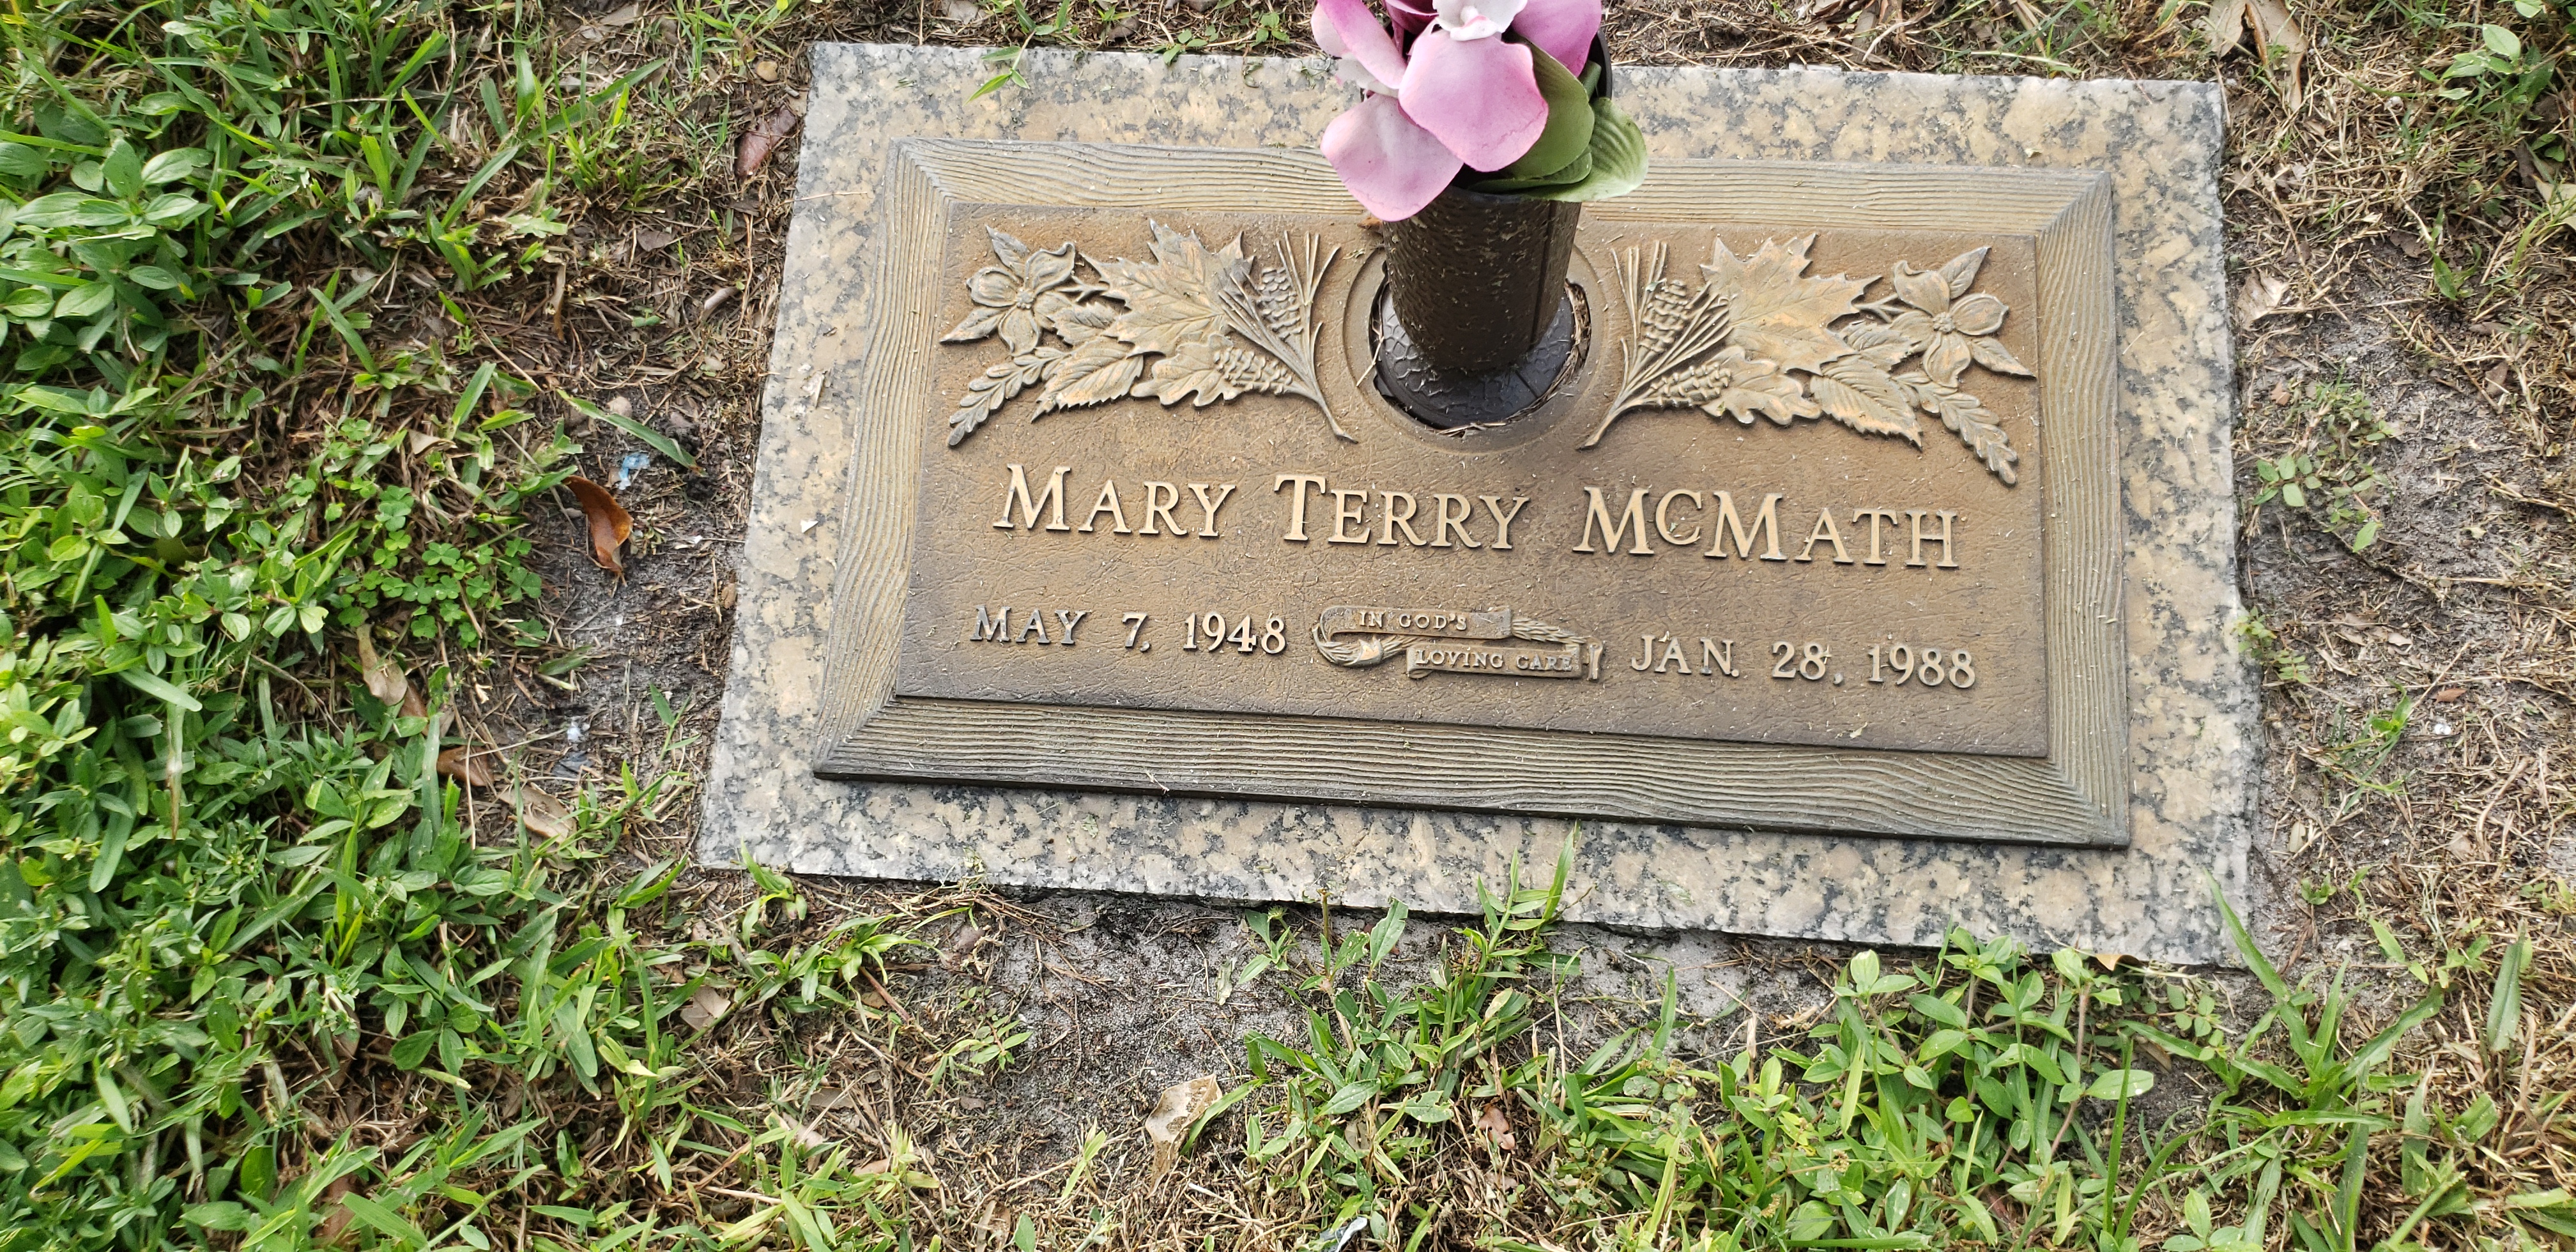 Mary Terry McMath